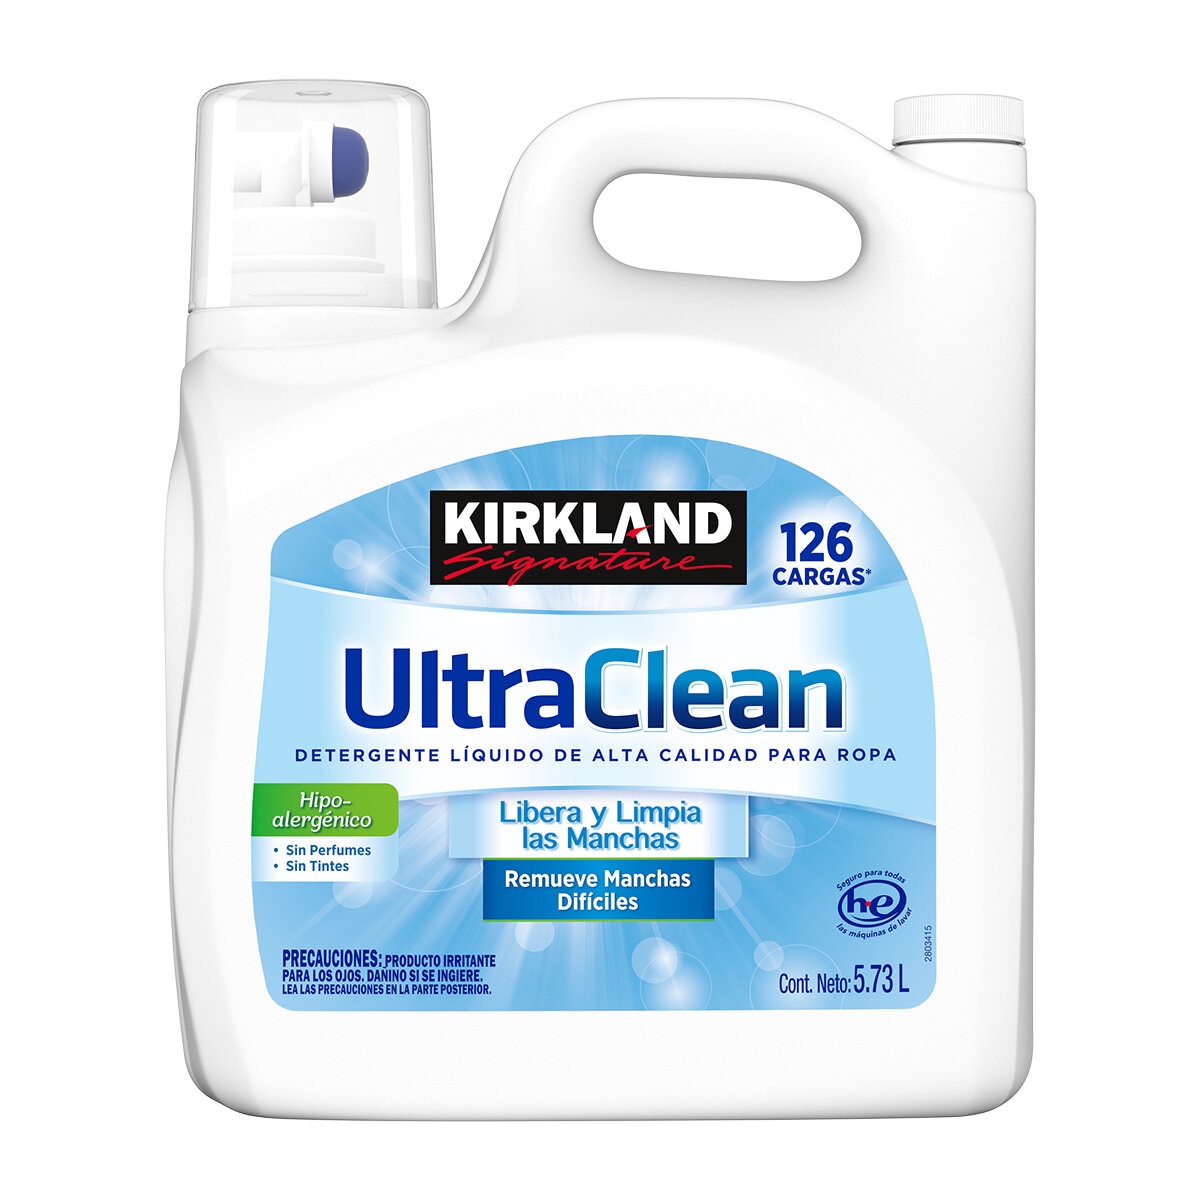 Kirkland Signature Ultra Clean Detergente Líquido sin Aromatizante 5.73 l